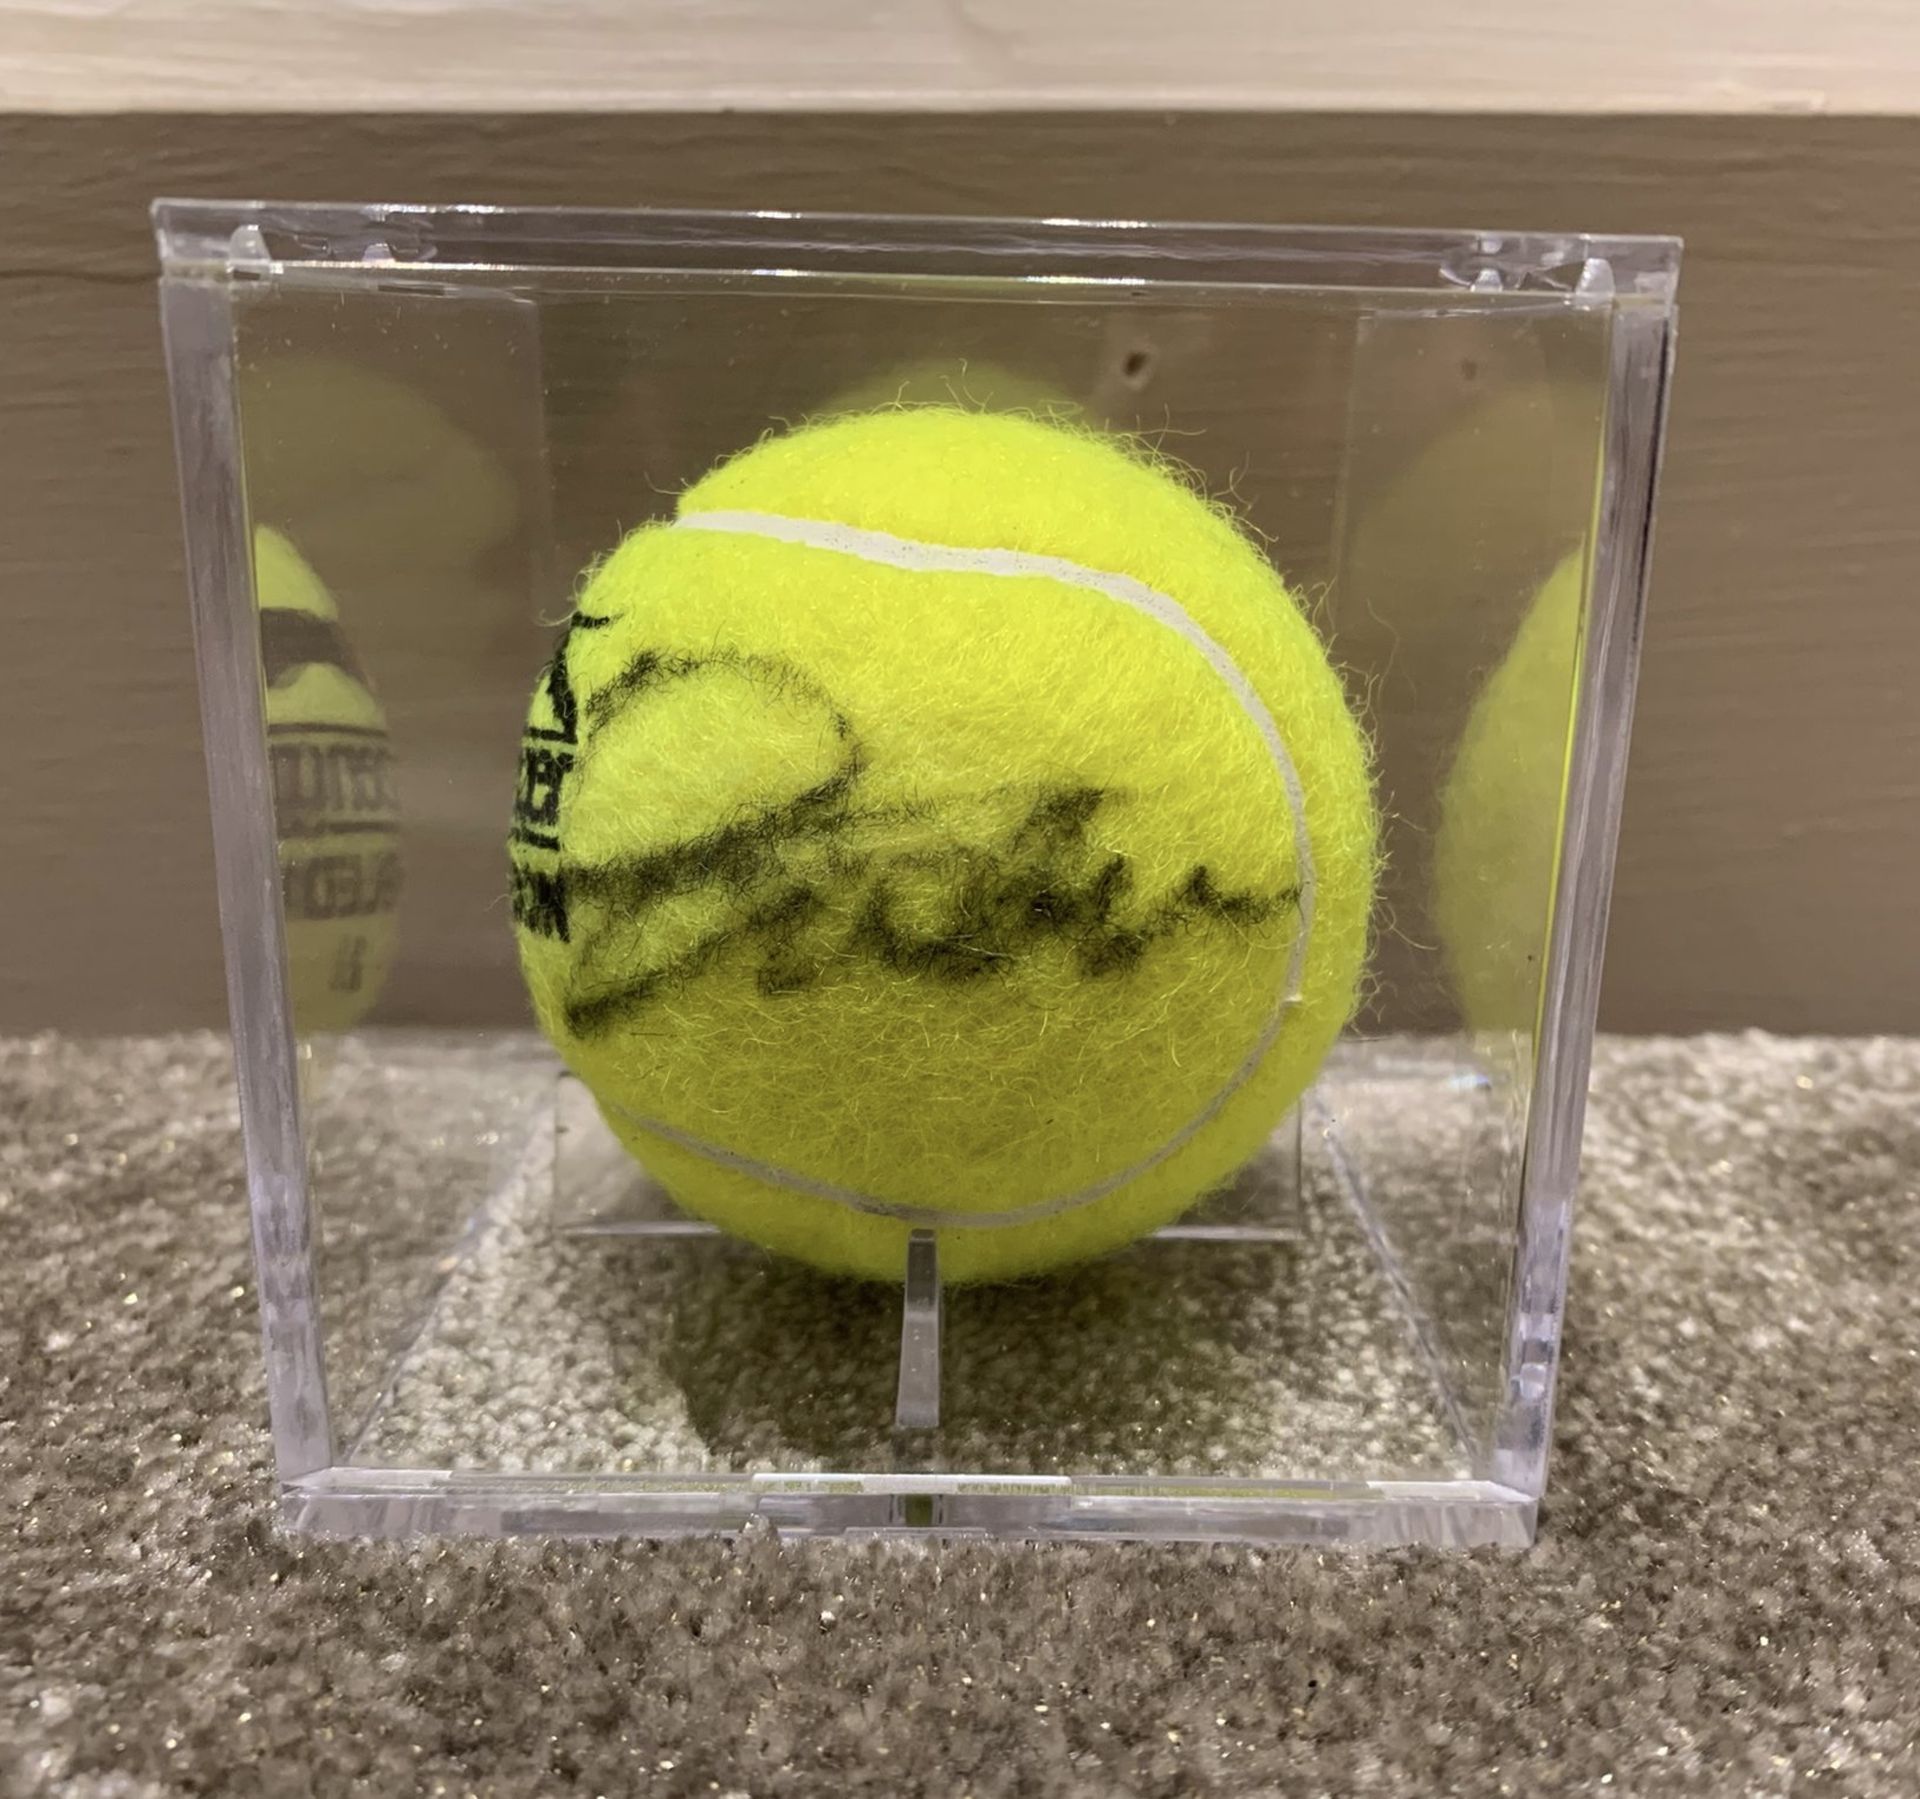 Emma Raducanu Signed Tennis Ball In Display Case - Image 4 of 5